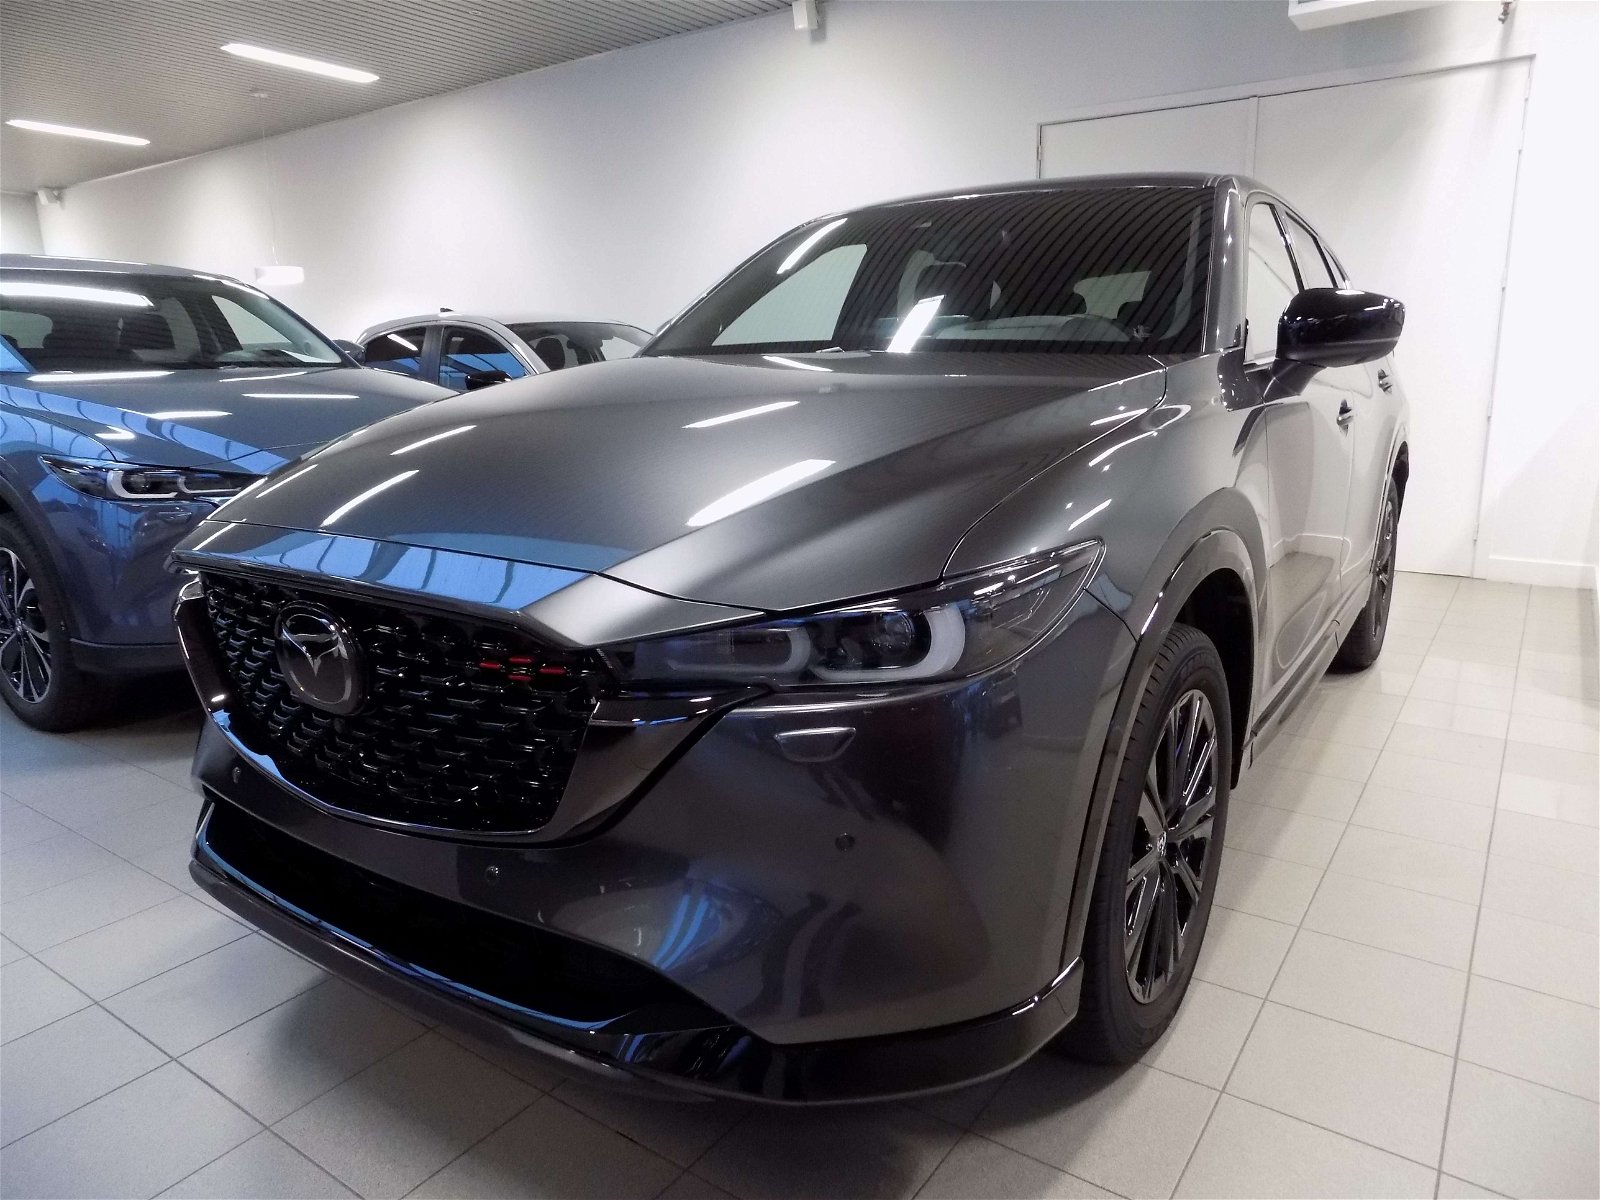 Mazda neuves en stock disponibles à la vente en Belgique